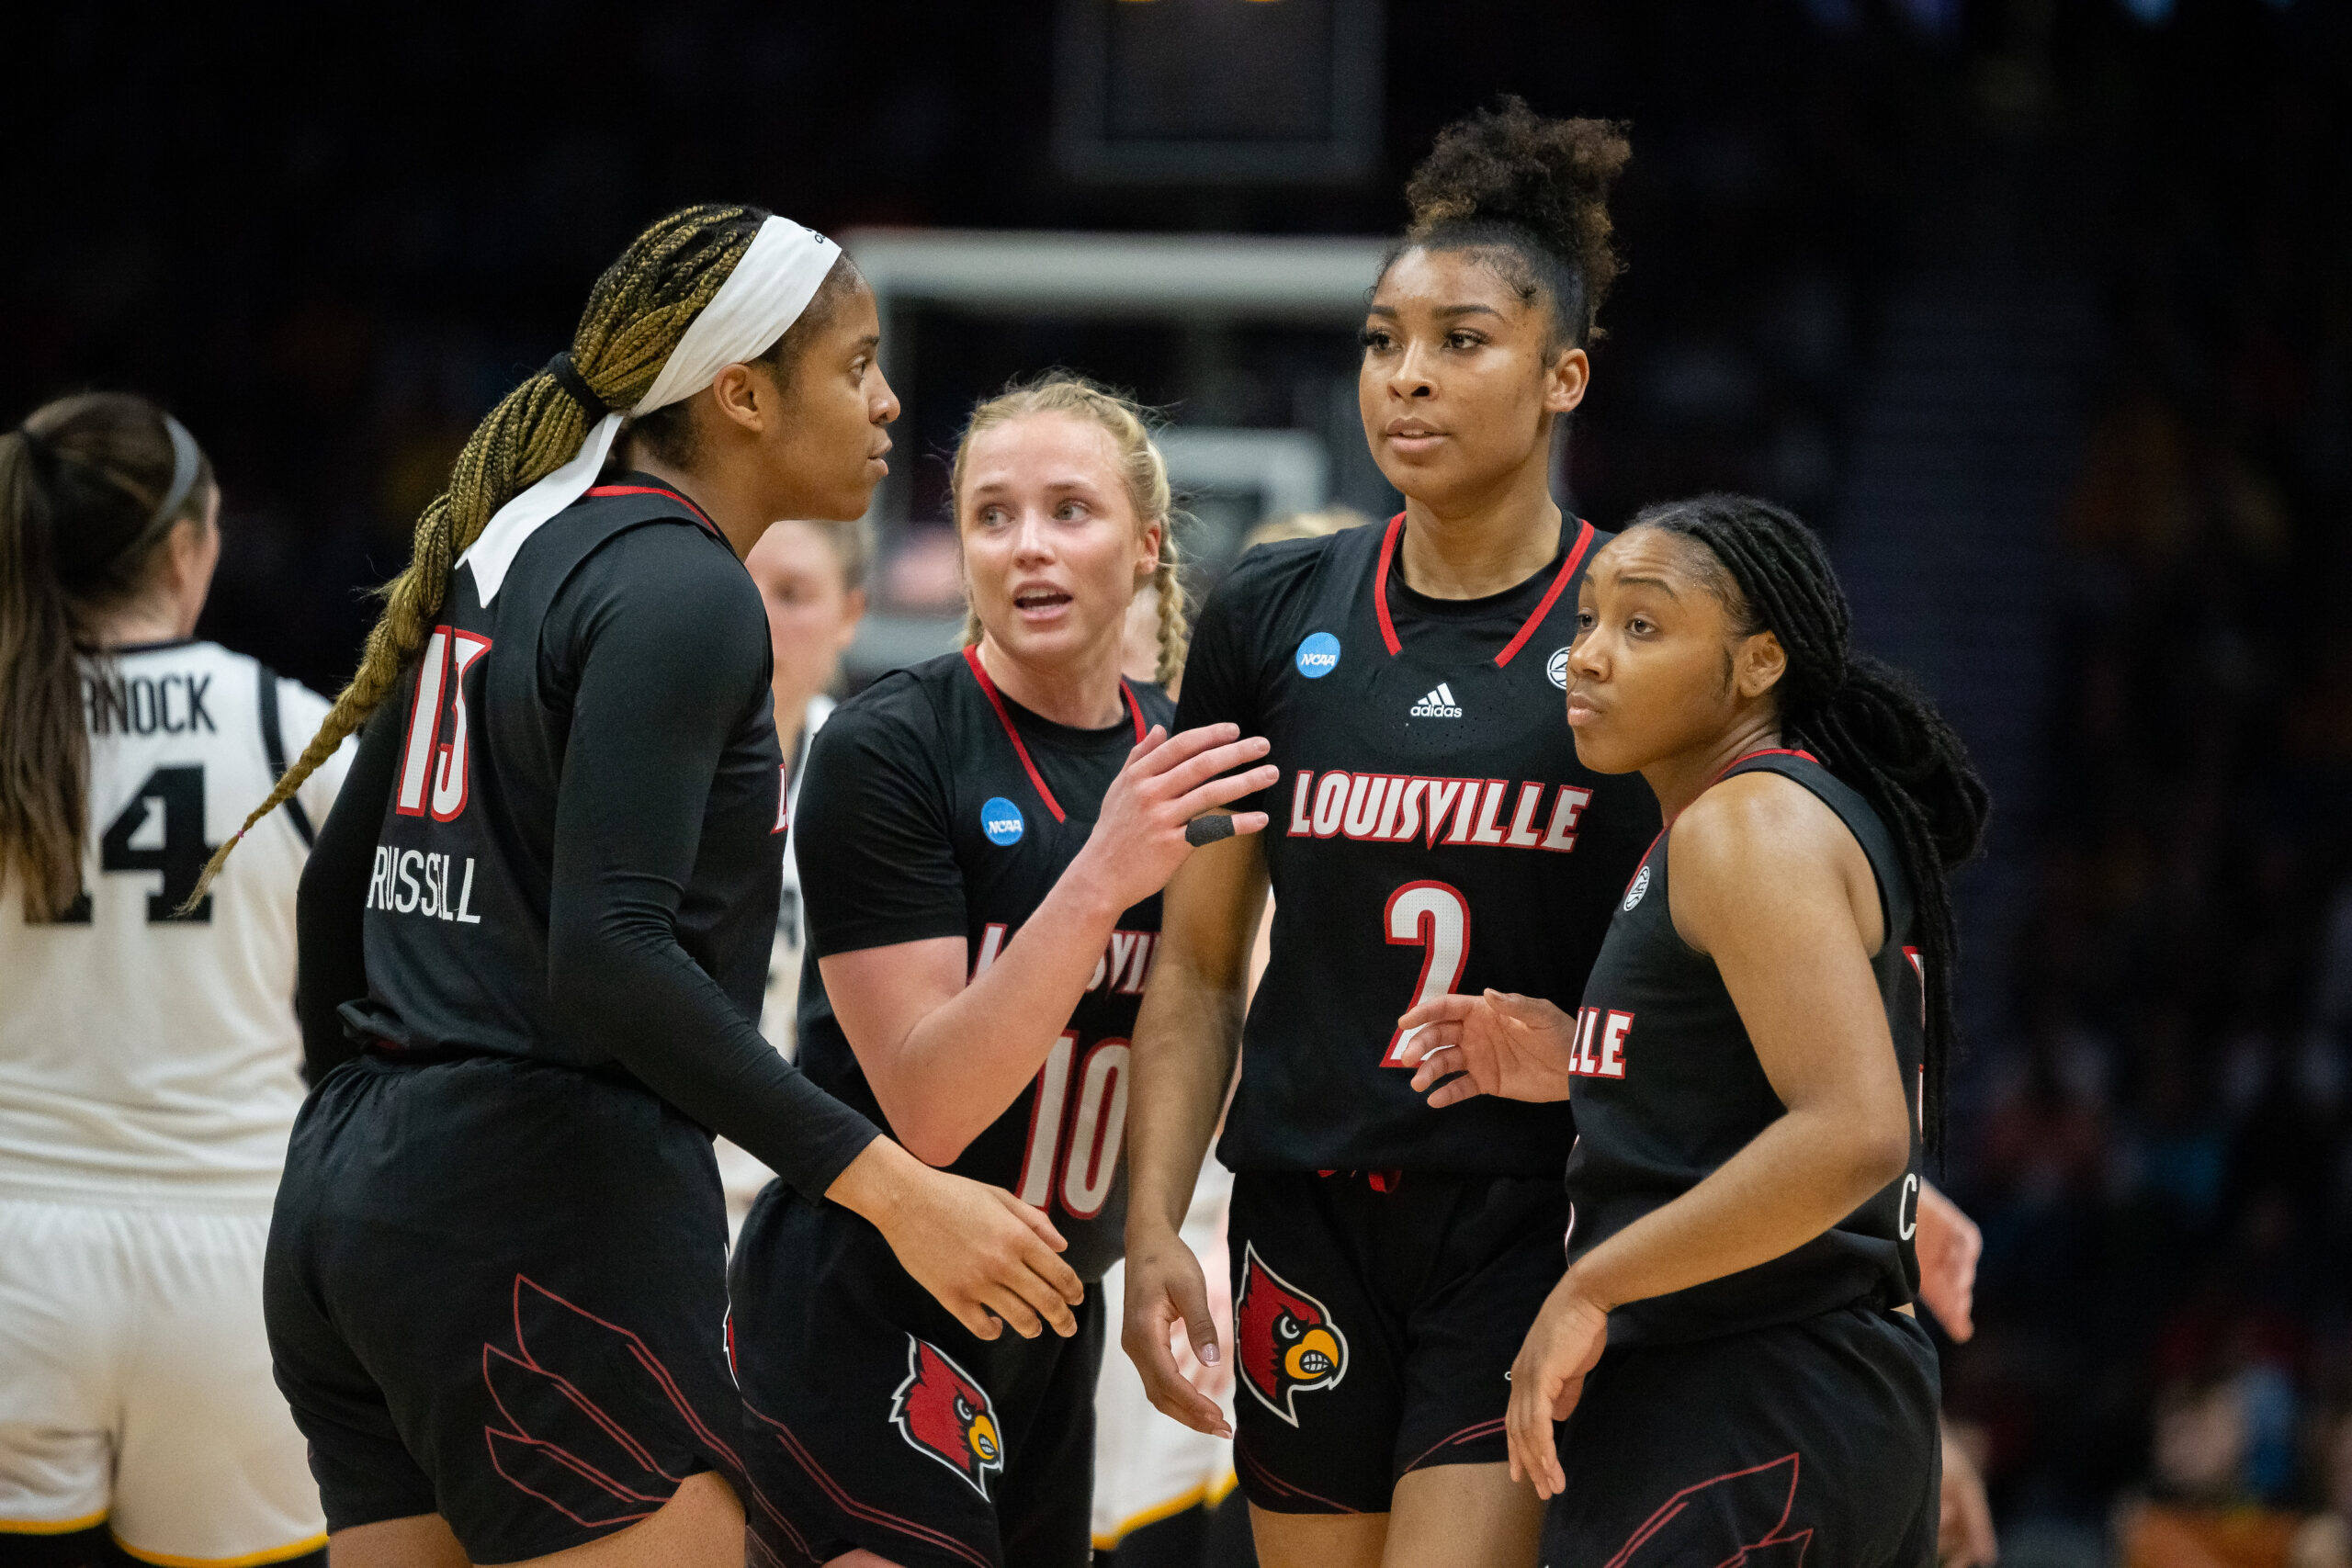 NCAA University of Louisville Cardinals Team Colors Non-Slip